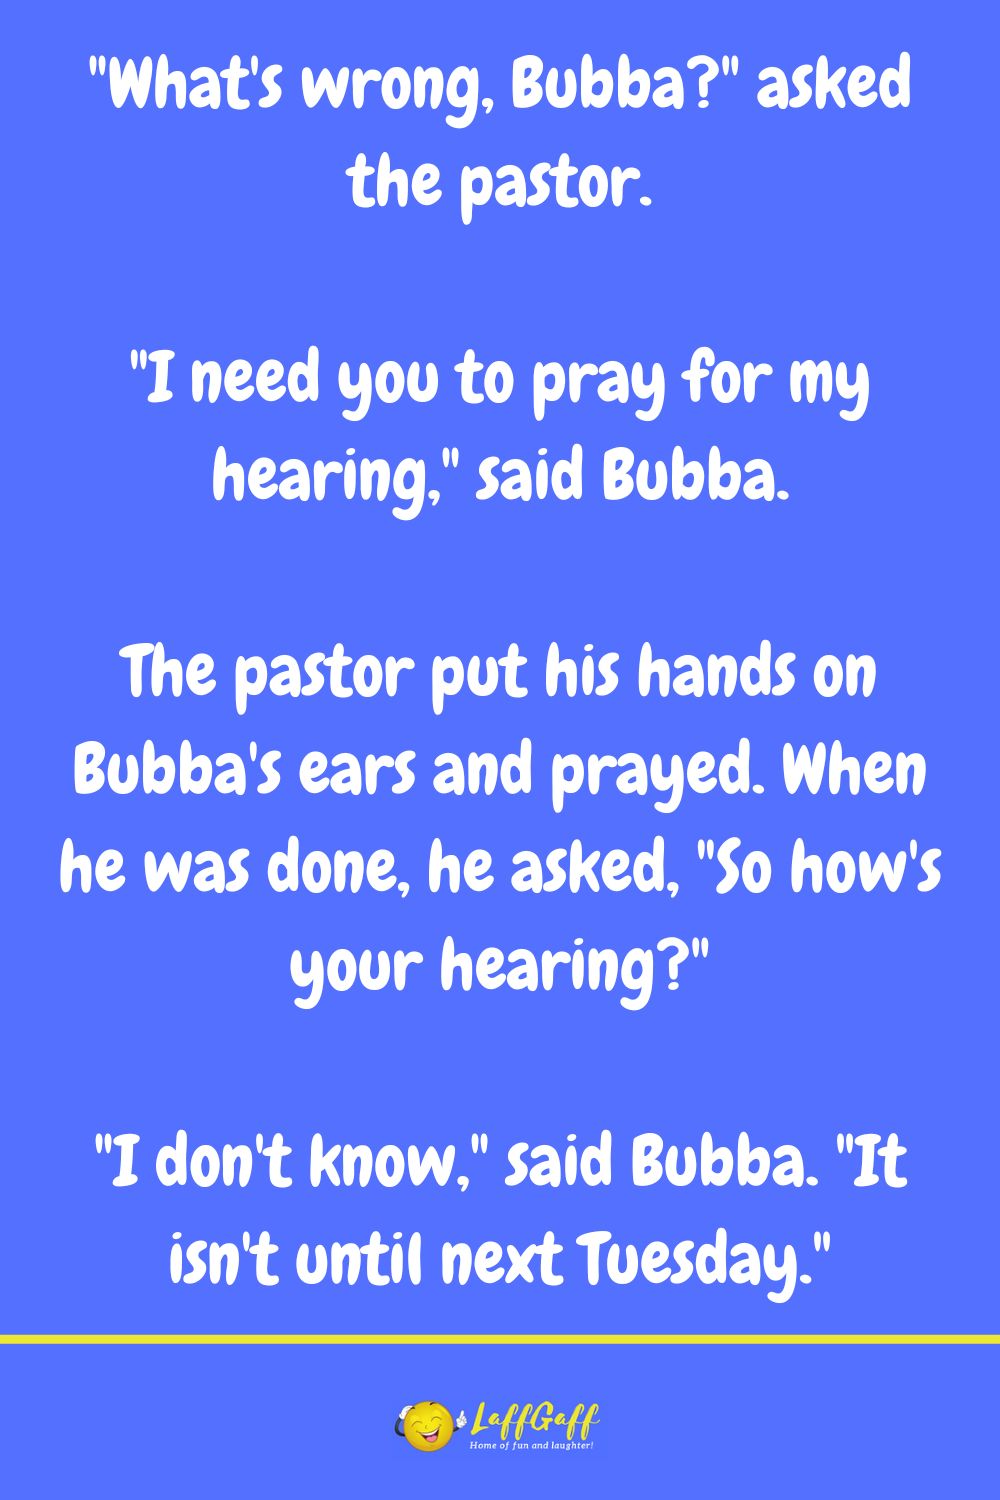 Bubba's hearing joke from LaffGaff.